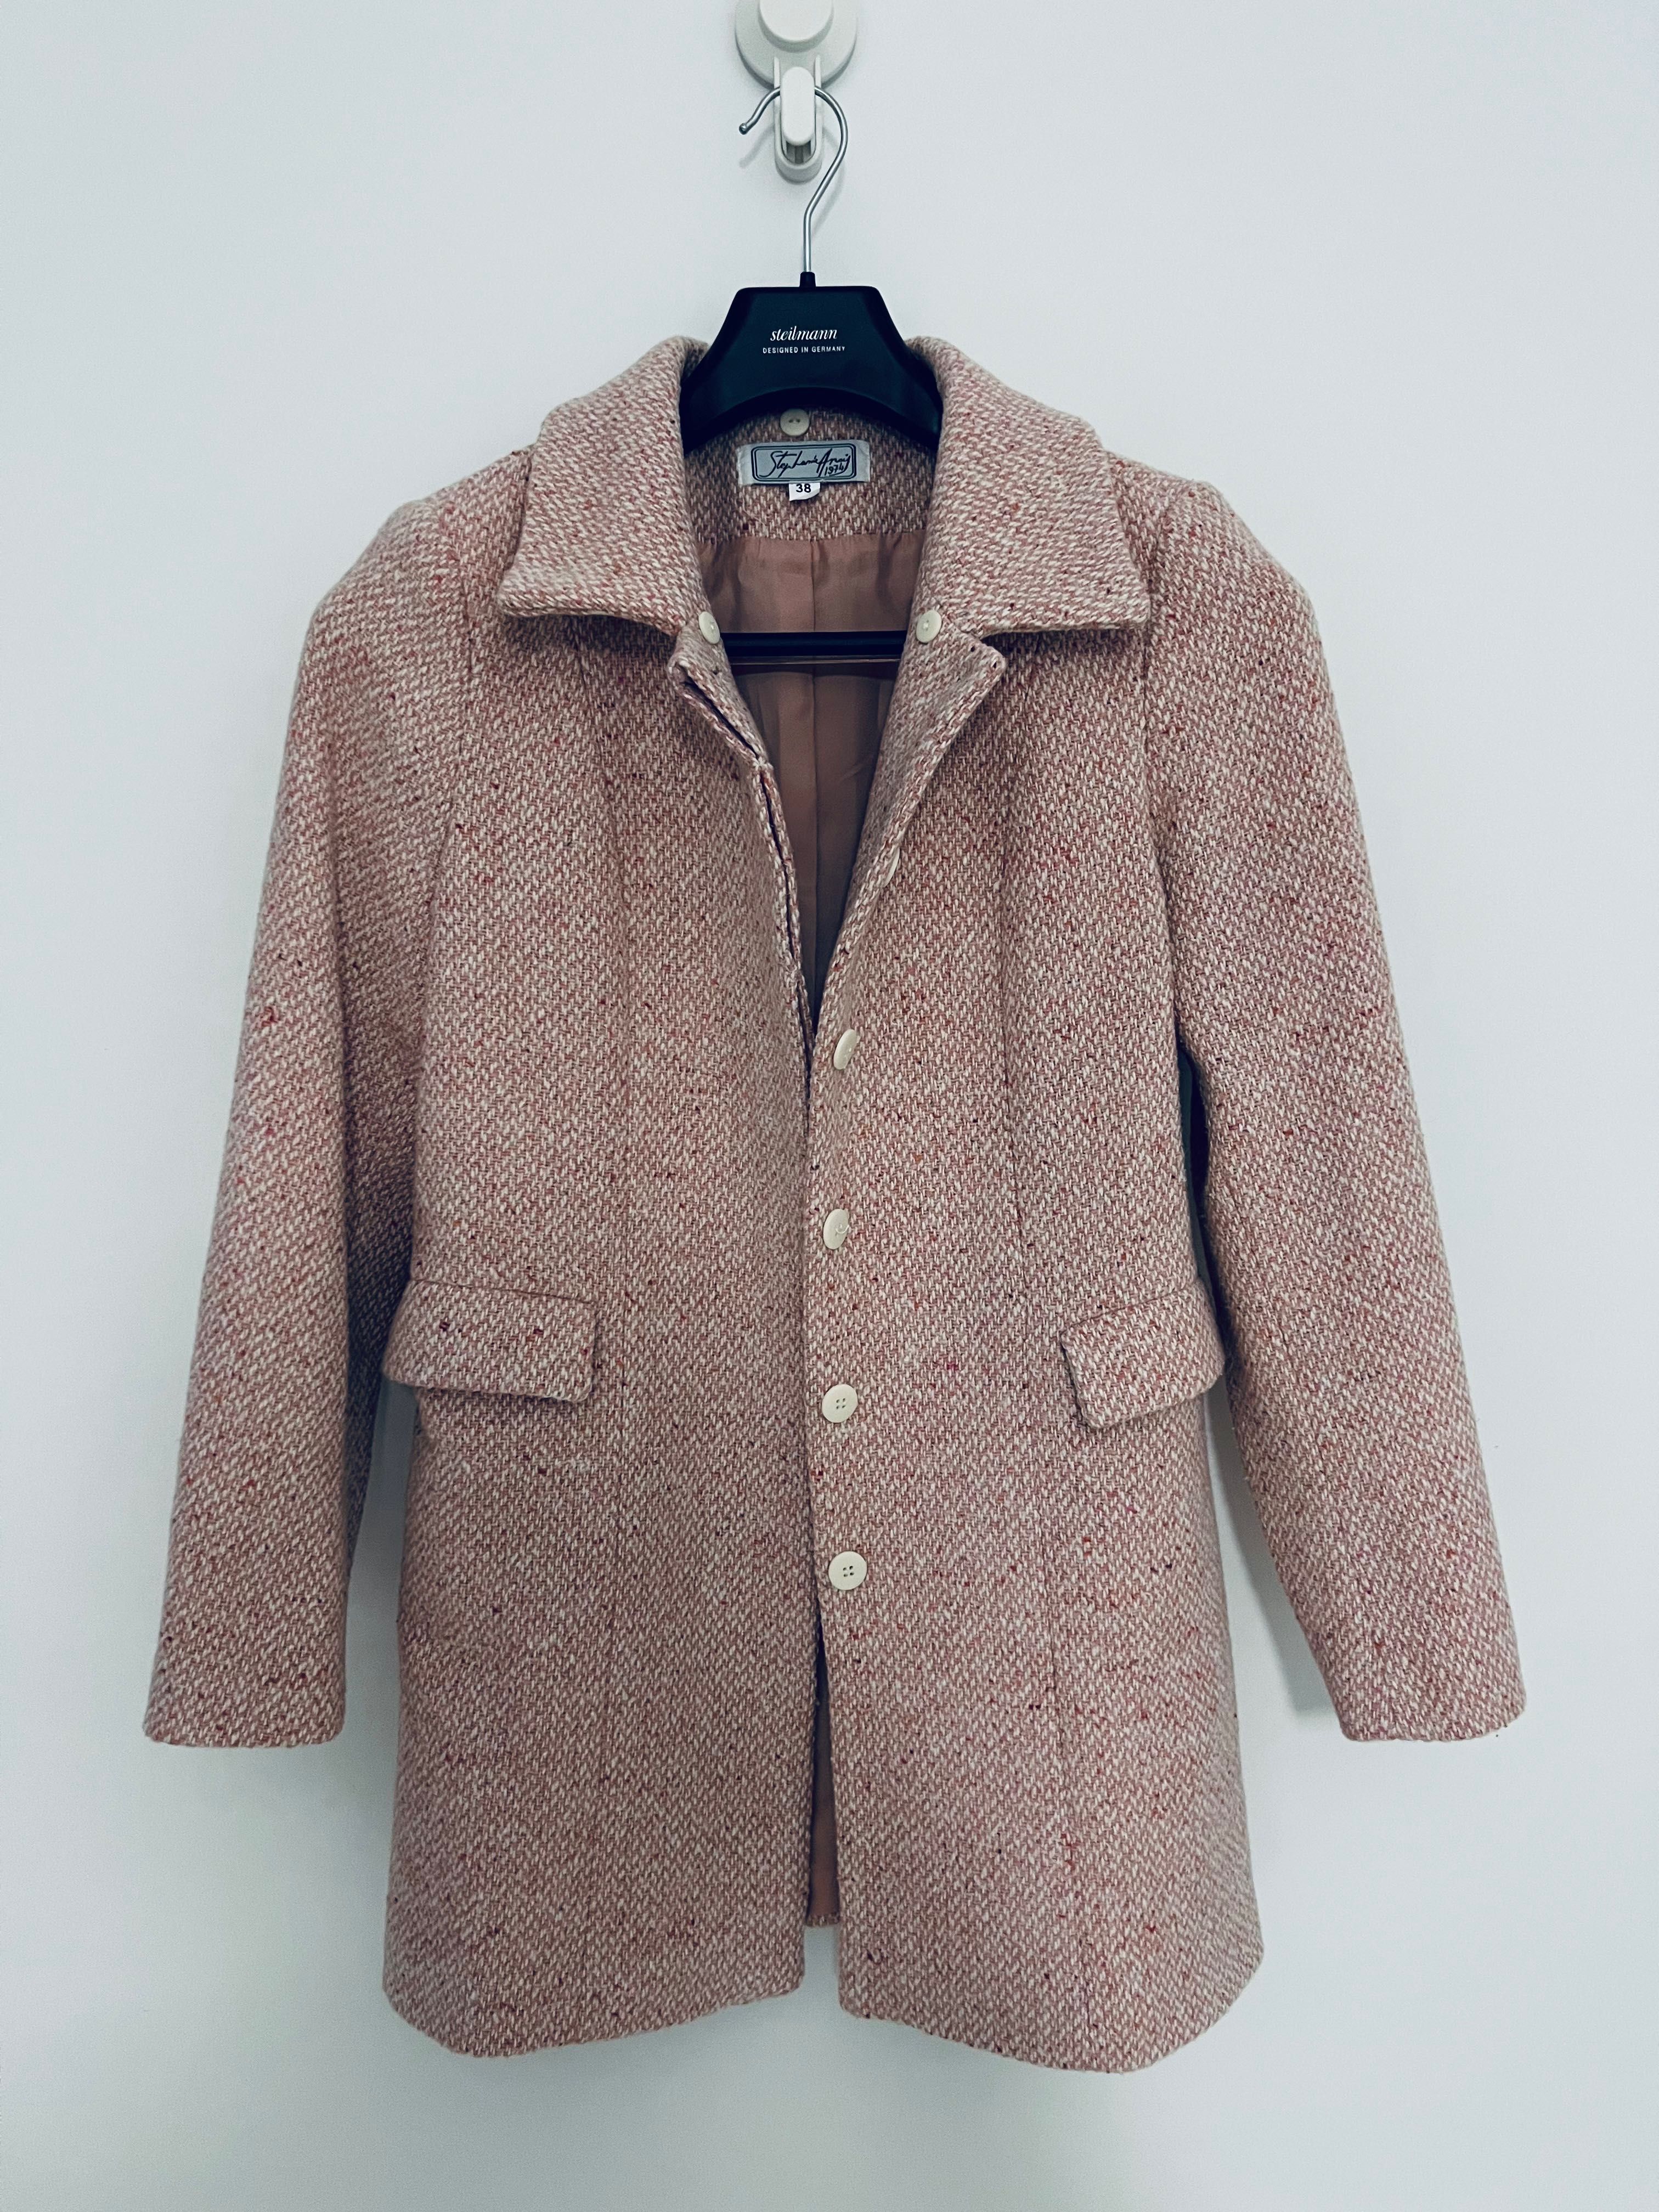 Palton de lana Stephanie Anais 1974